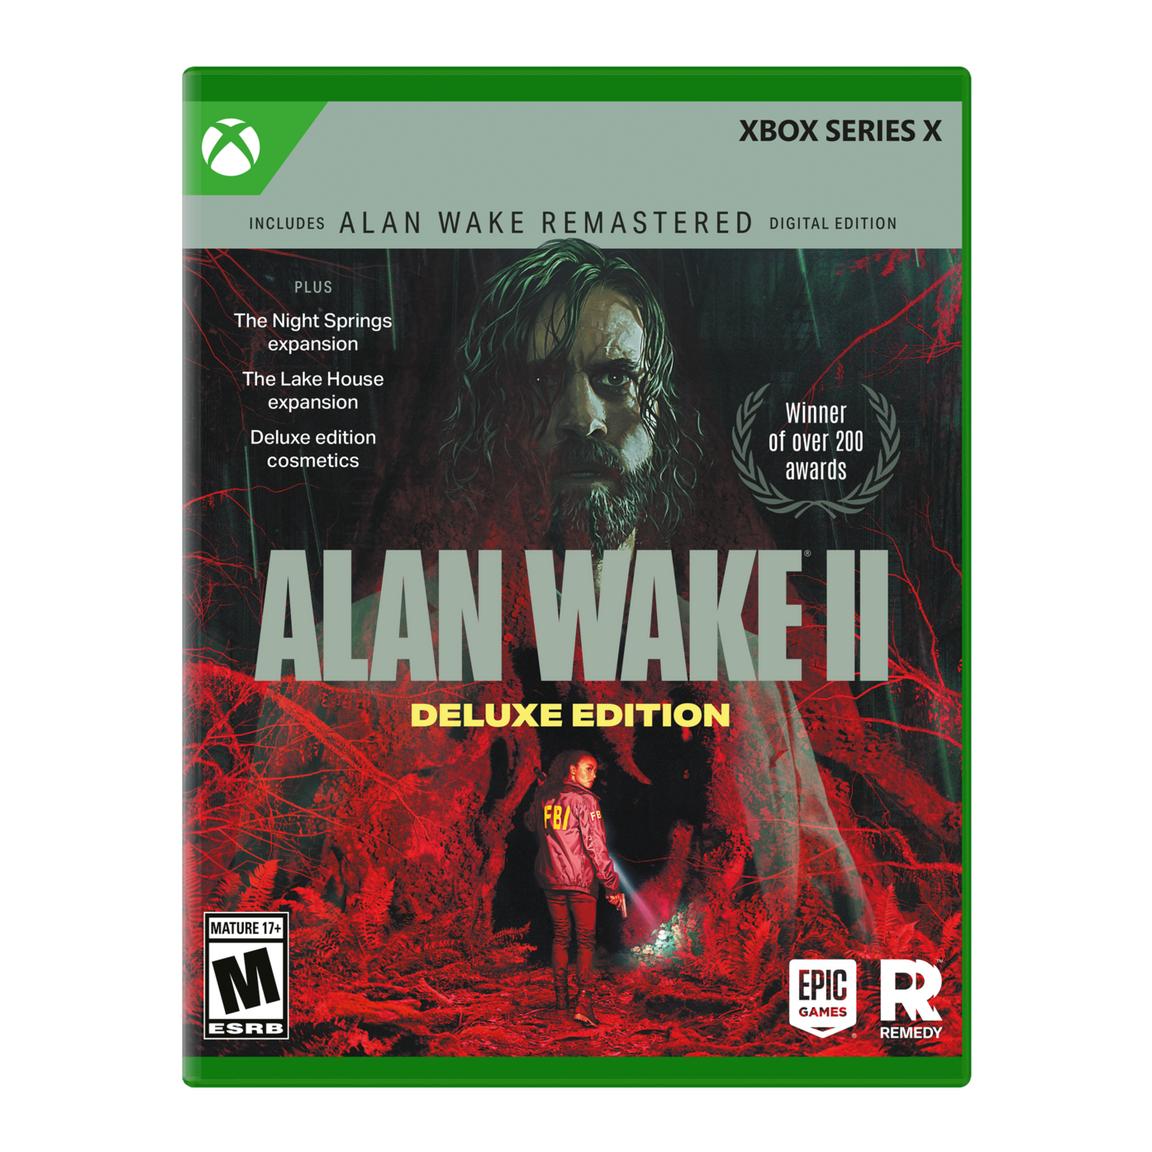 Alan Wake 2 Deluxe Edition - Xbox Series X